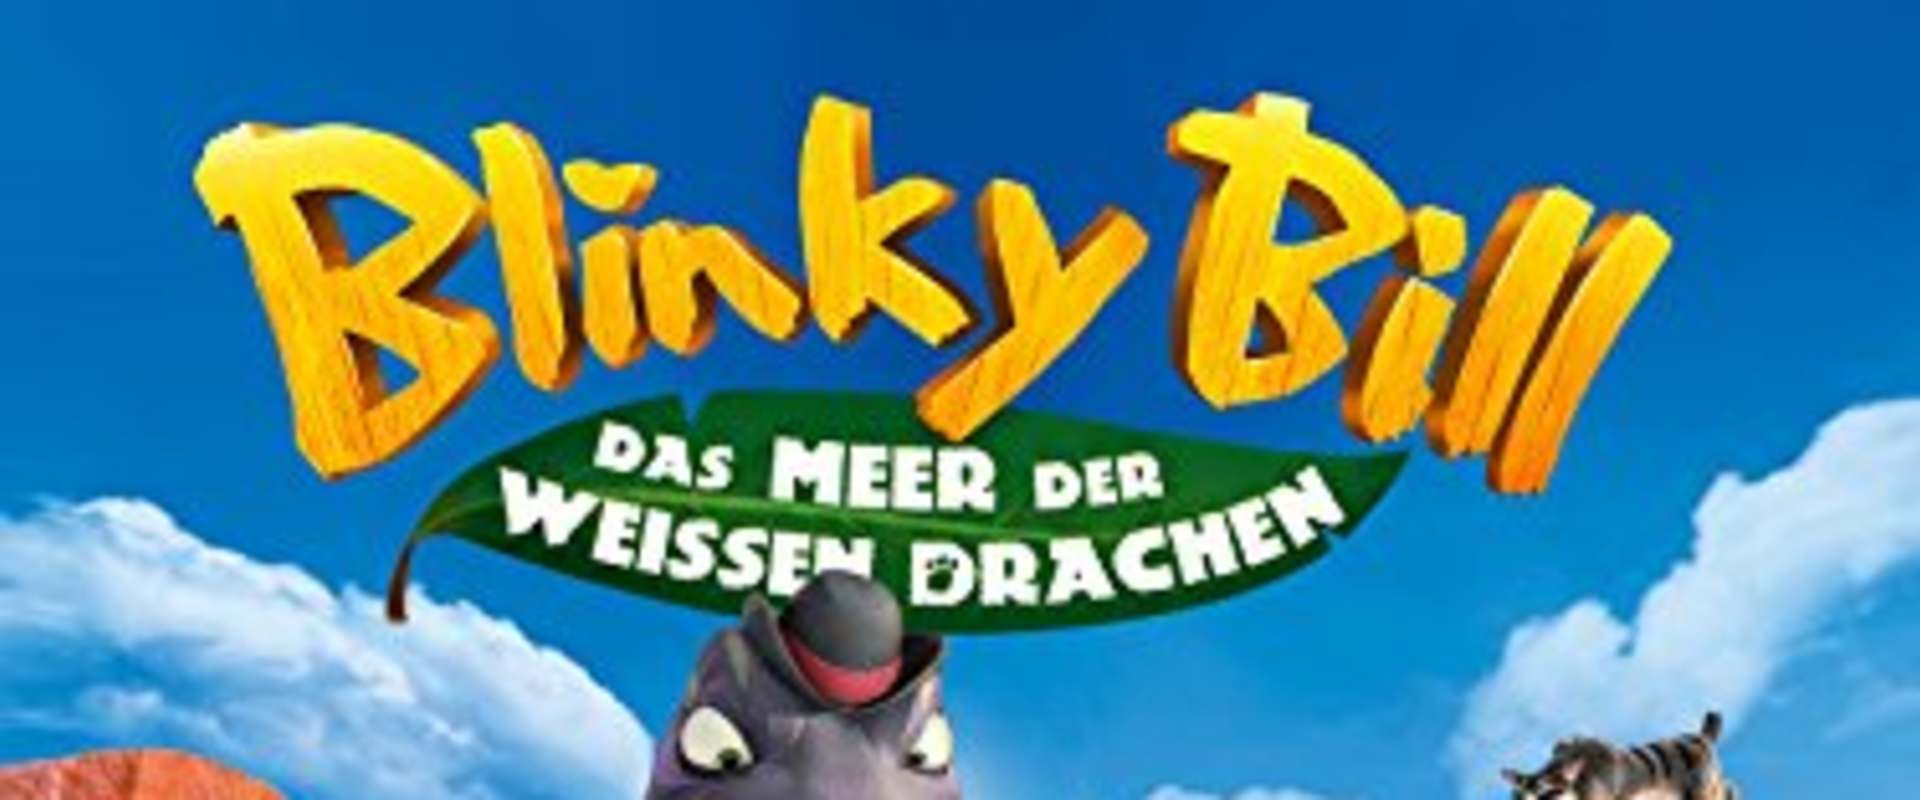 Blinky Bill the Movie background 2